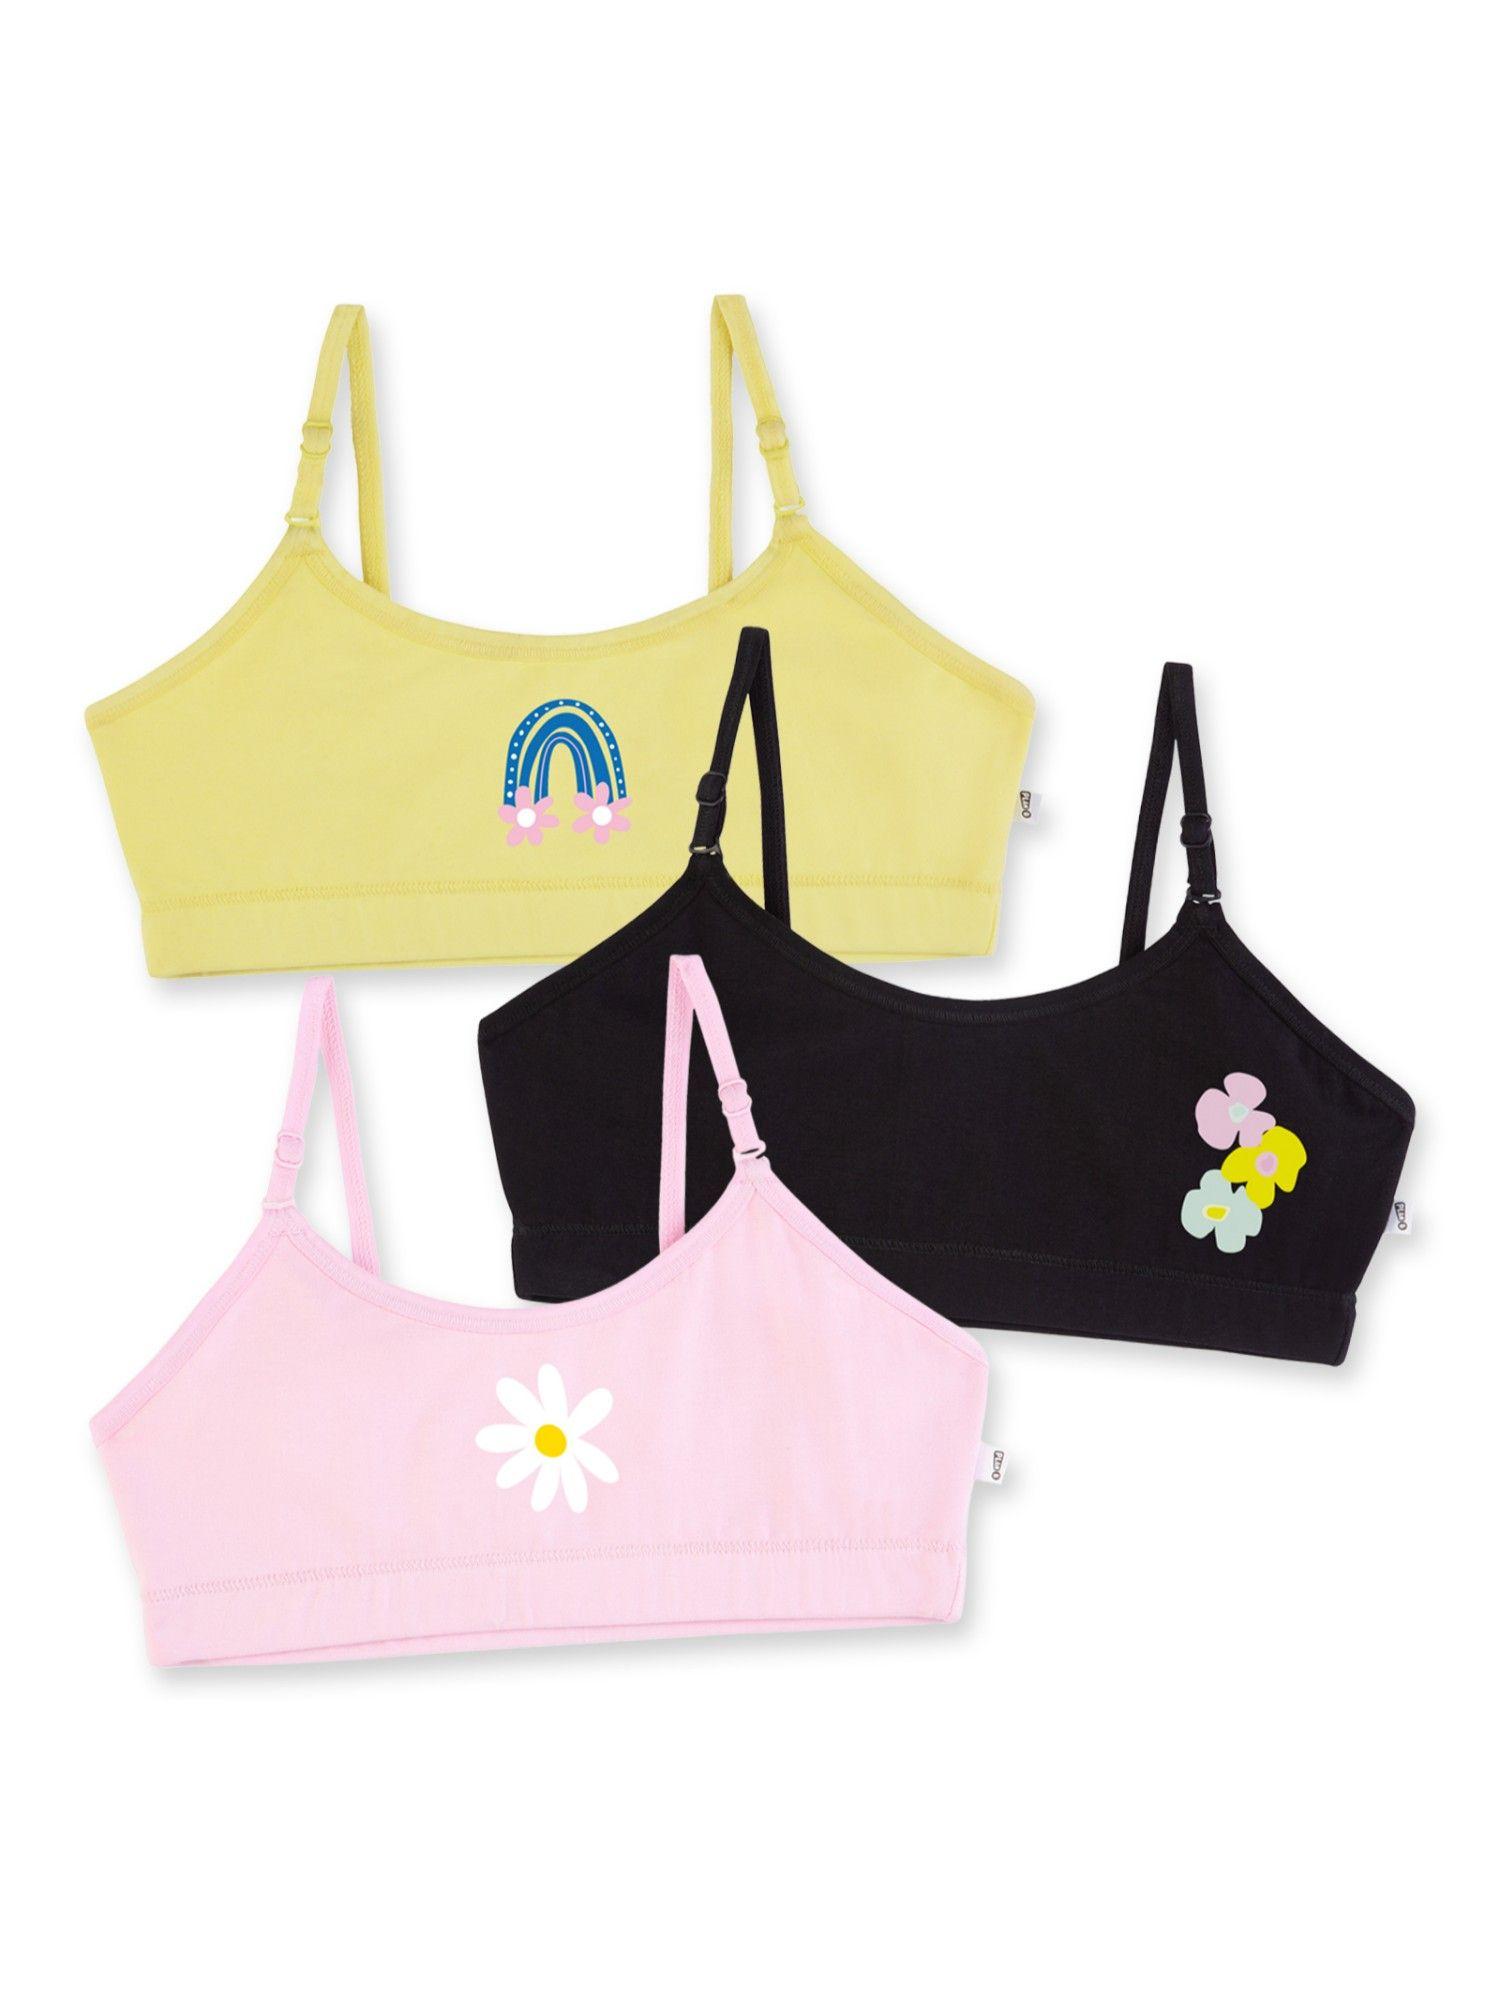 daisy training bras (pack of 3)